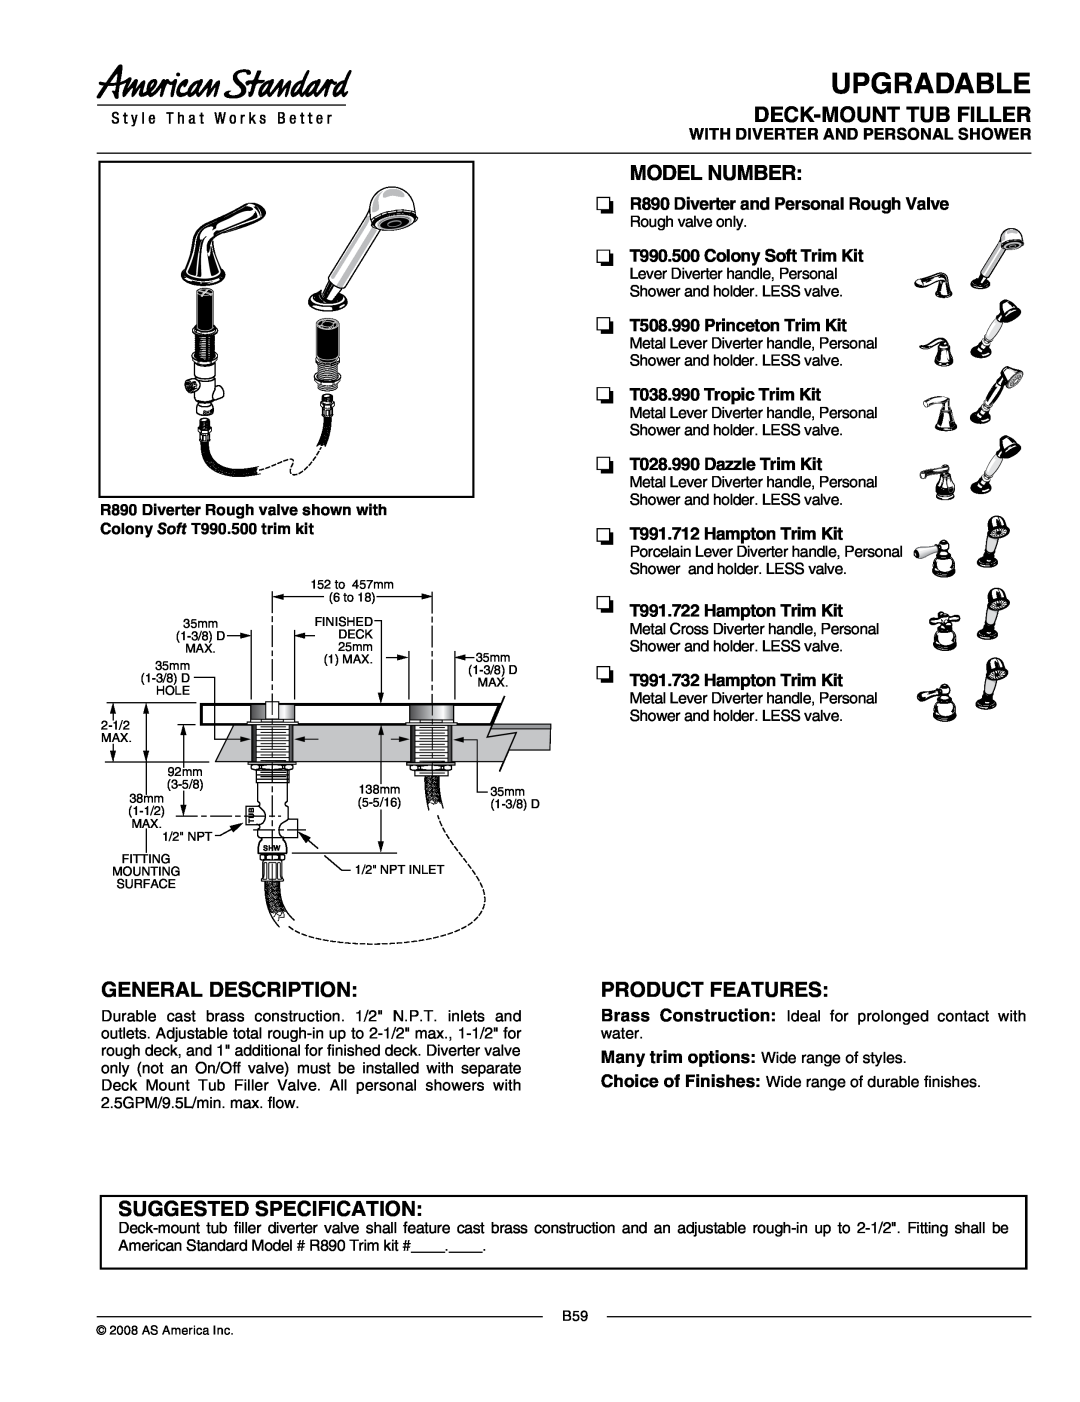 American Standard T991.732 manual Upgradable, Deck-Mounttub Filler, Model Number, General Description, Product Features 